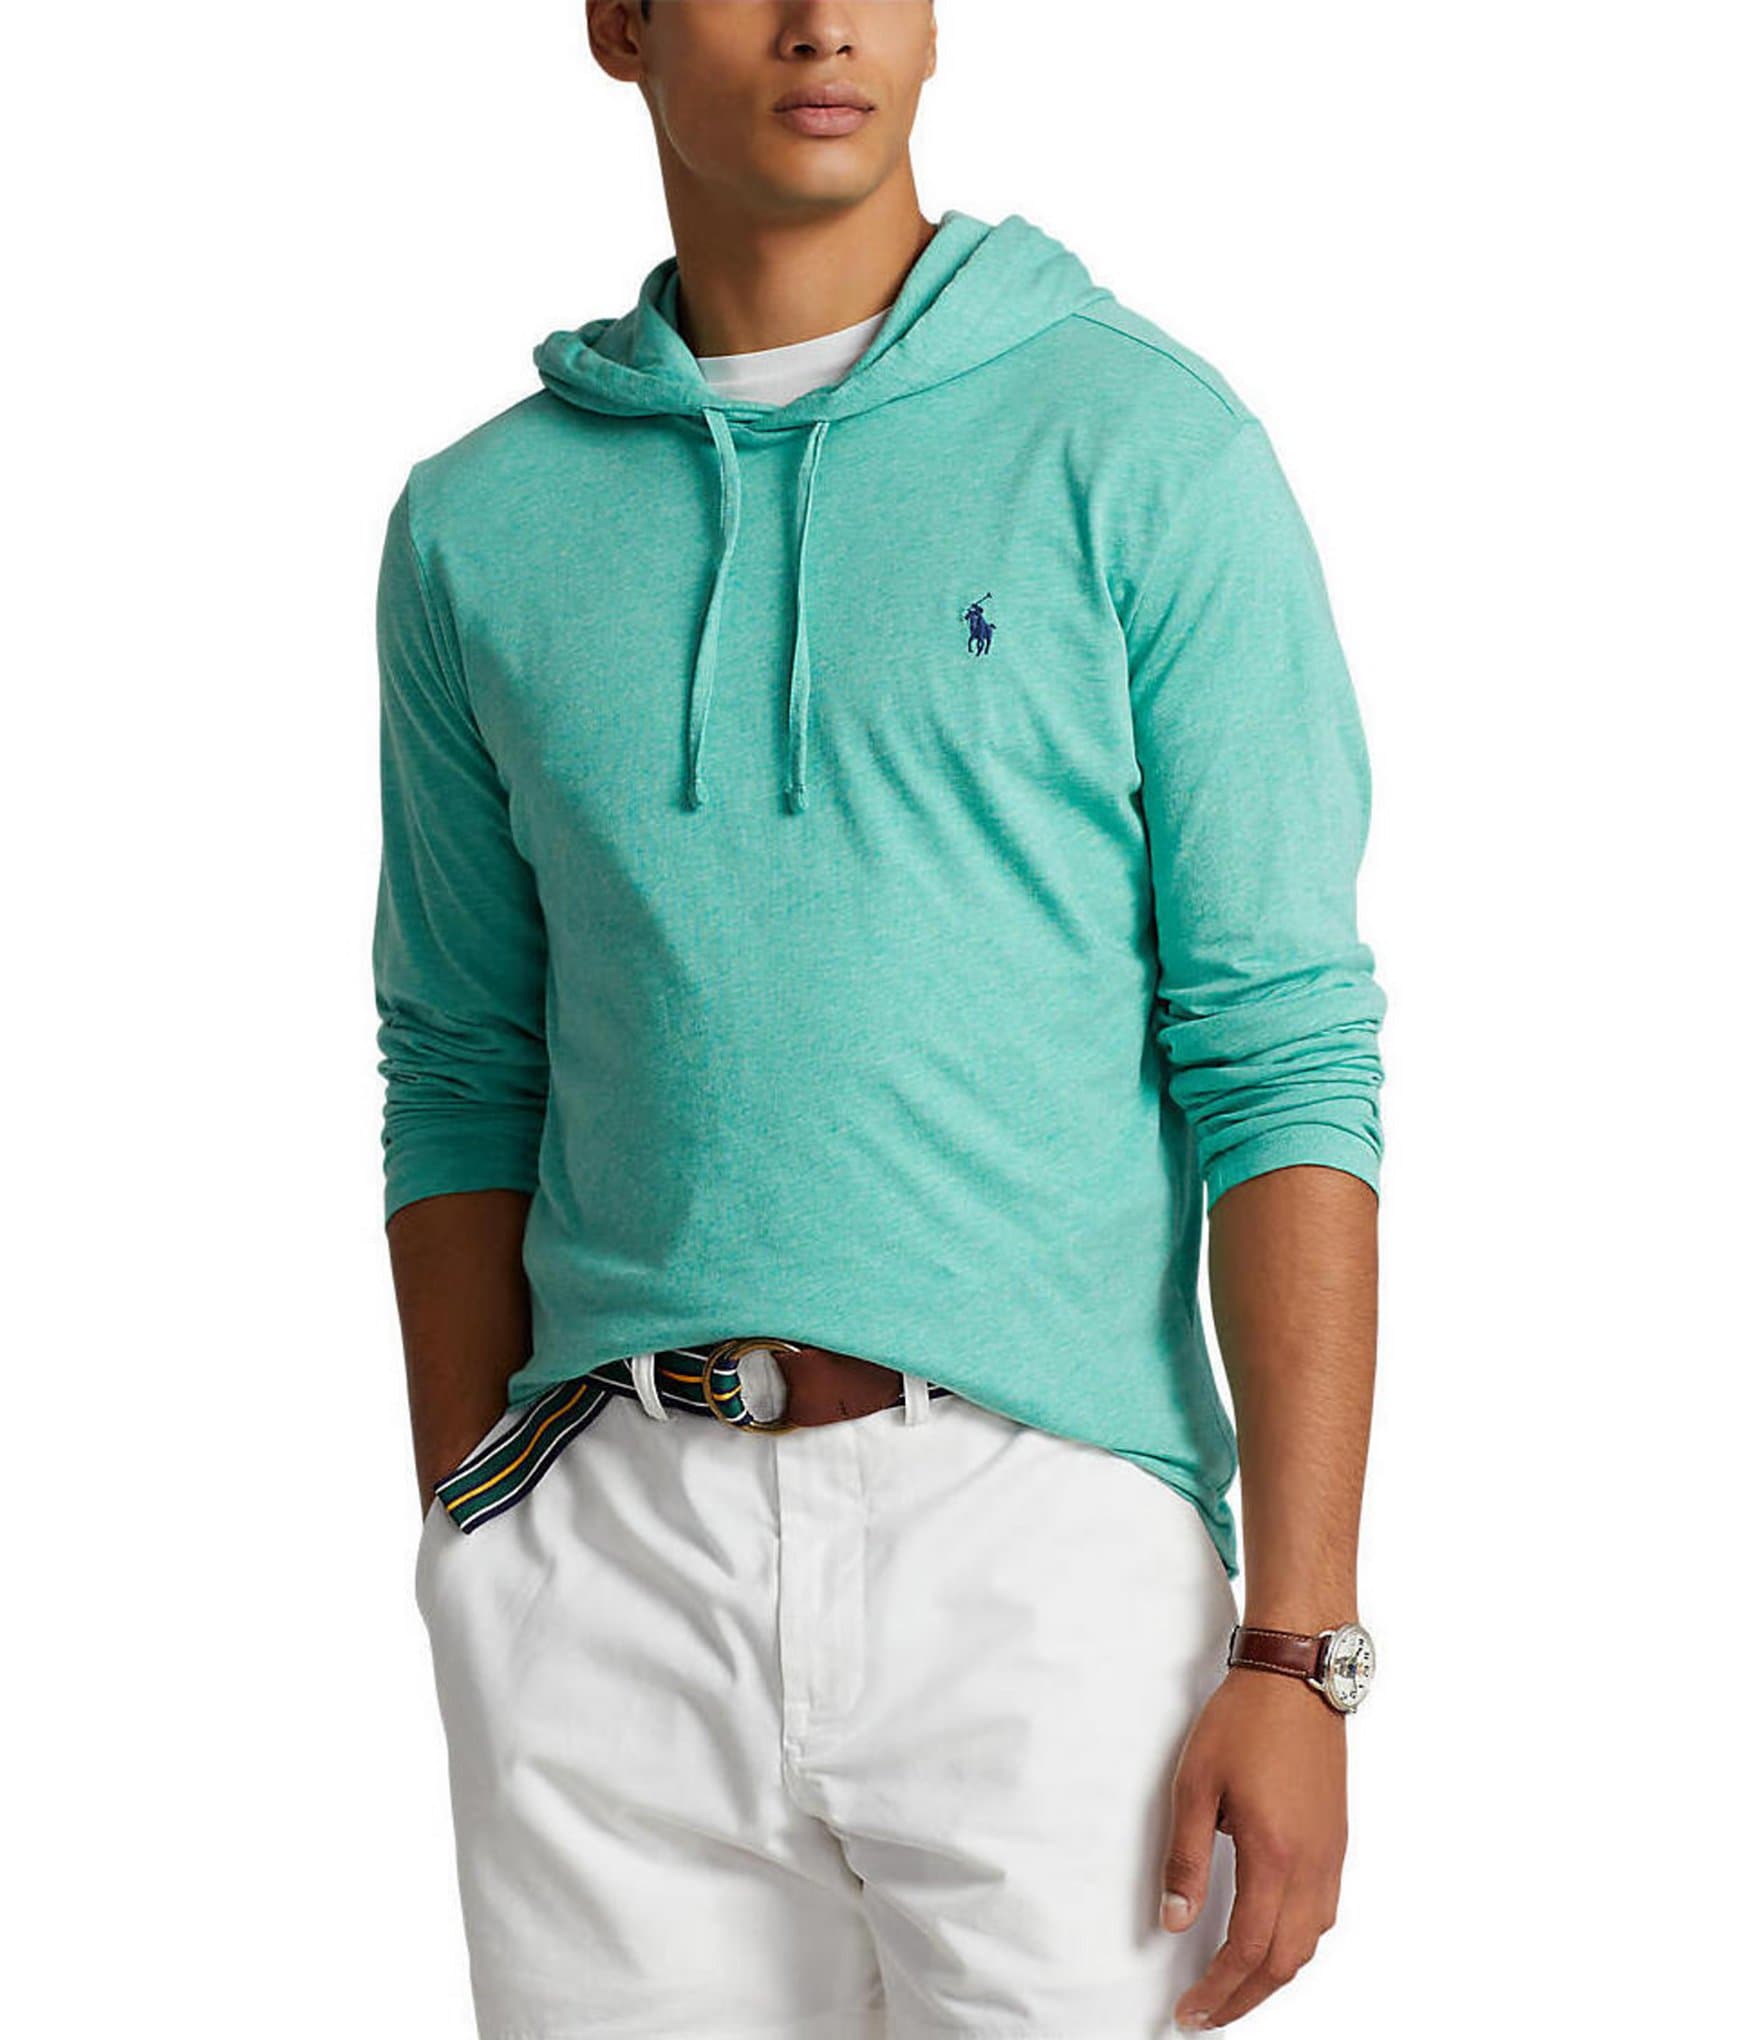 Polo Ralph Lauren Solid Hooded Tee Shirt - Westport Big & Tall